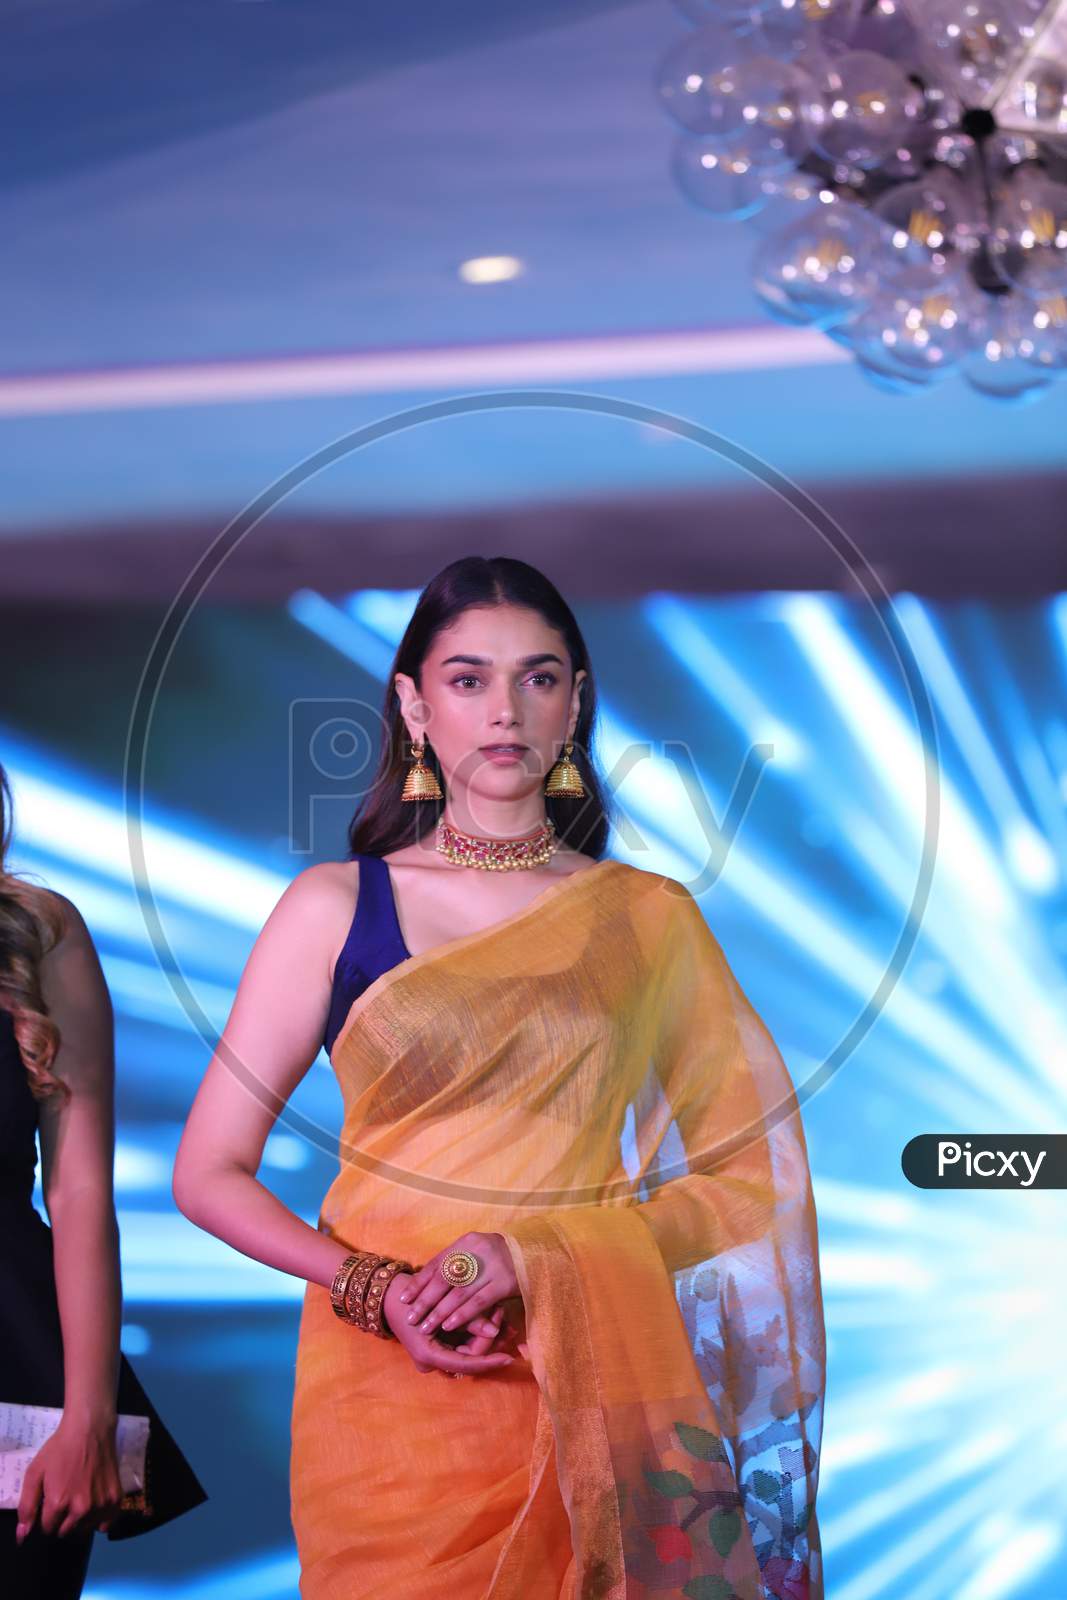 Indian Actress And Model Aditi Rao Hidari  In  an Fashion Event